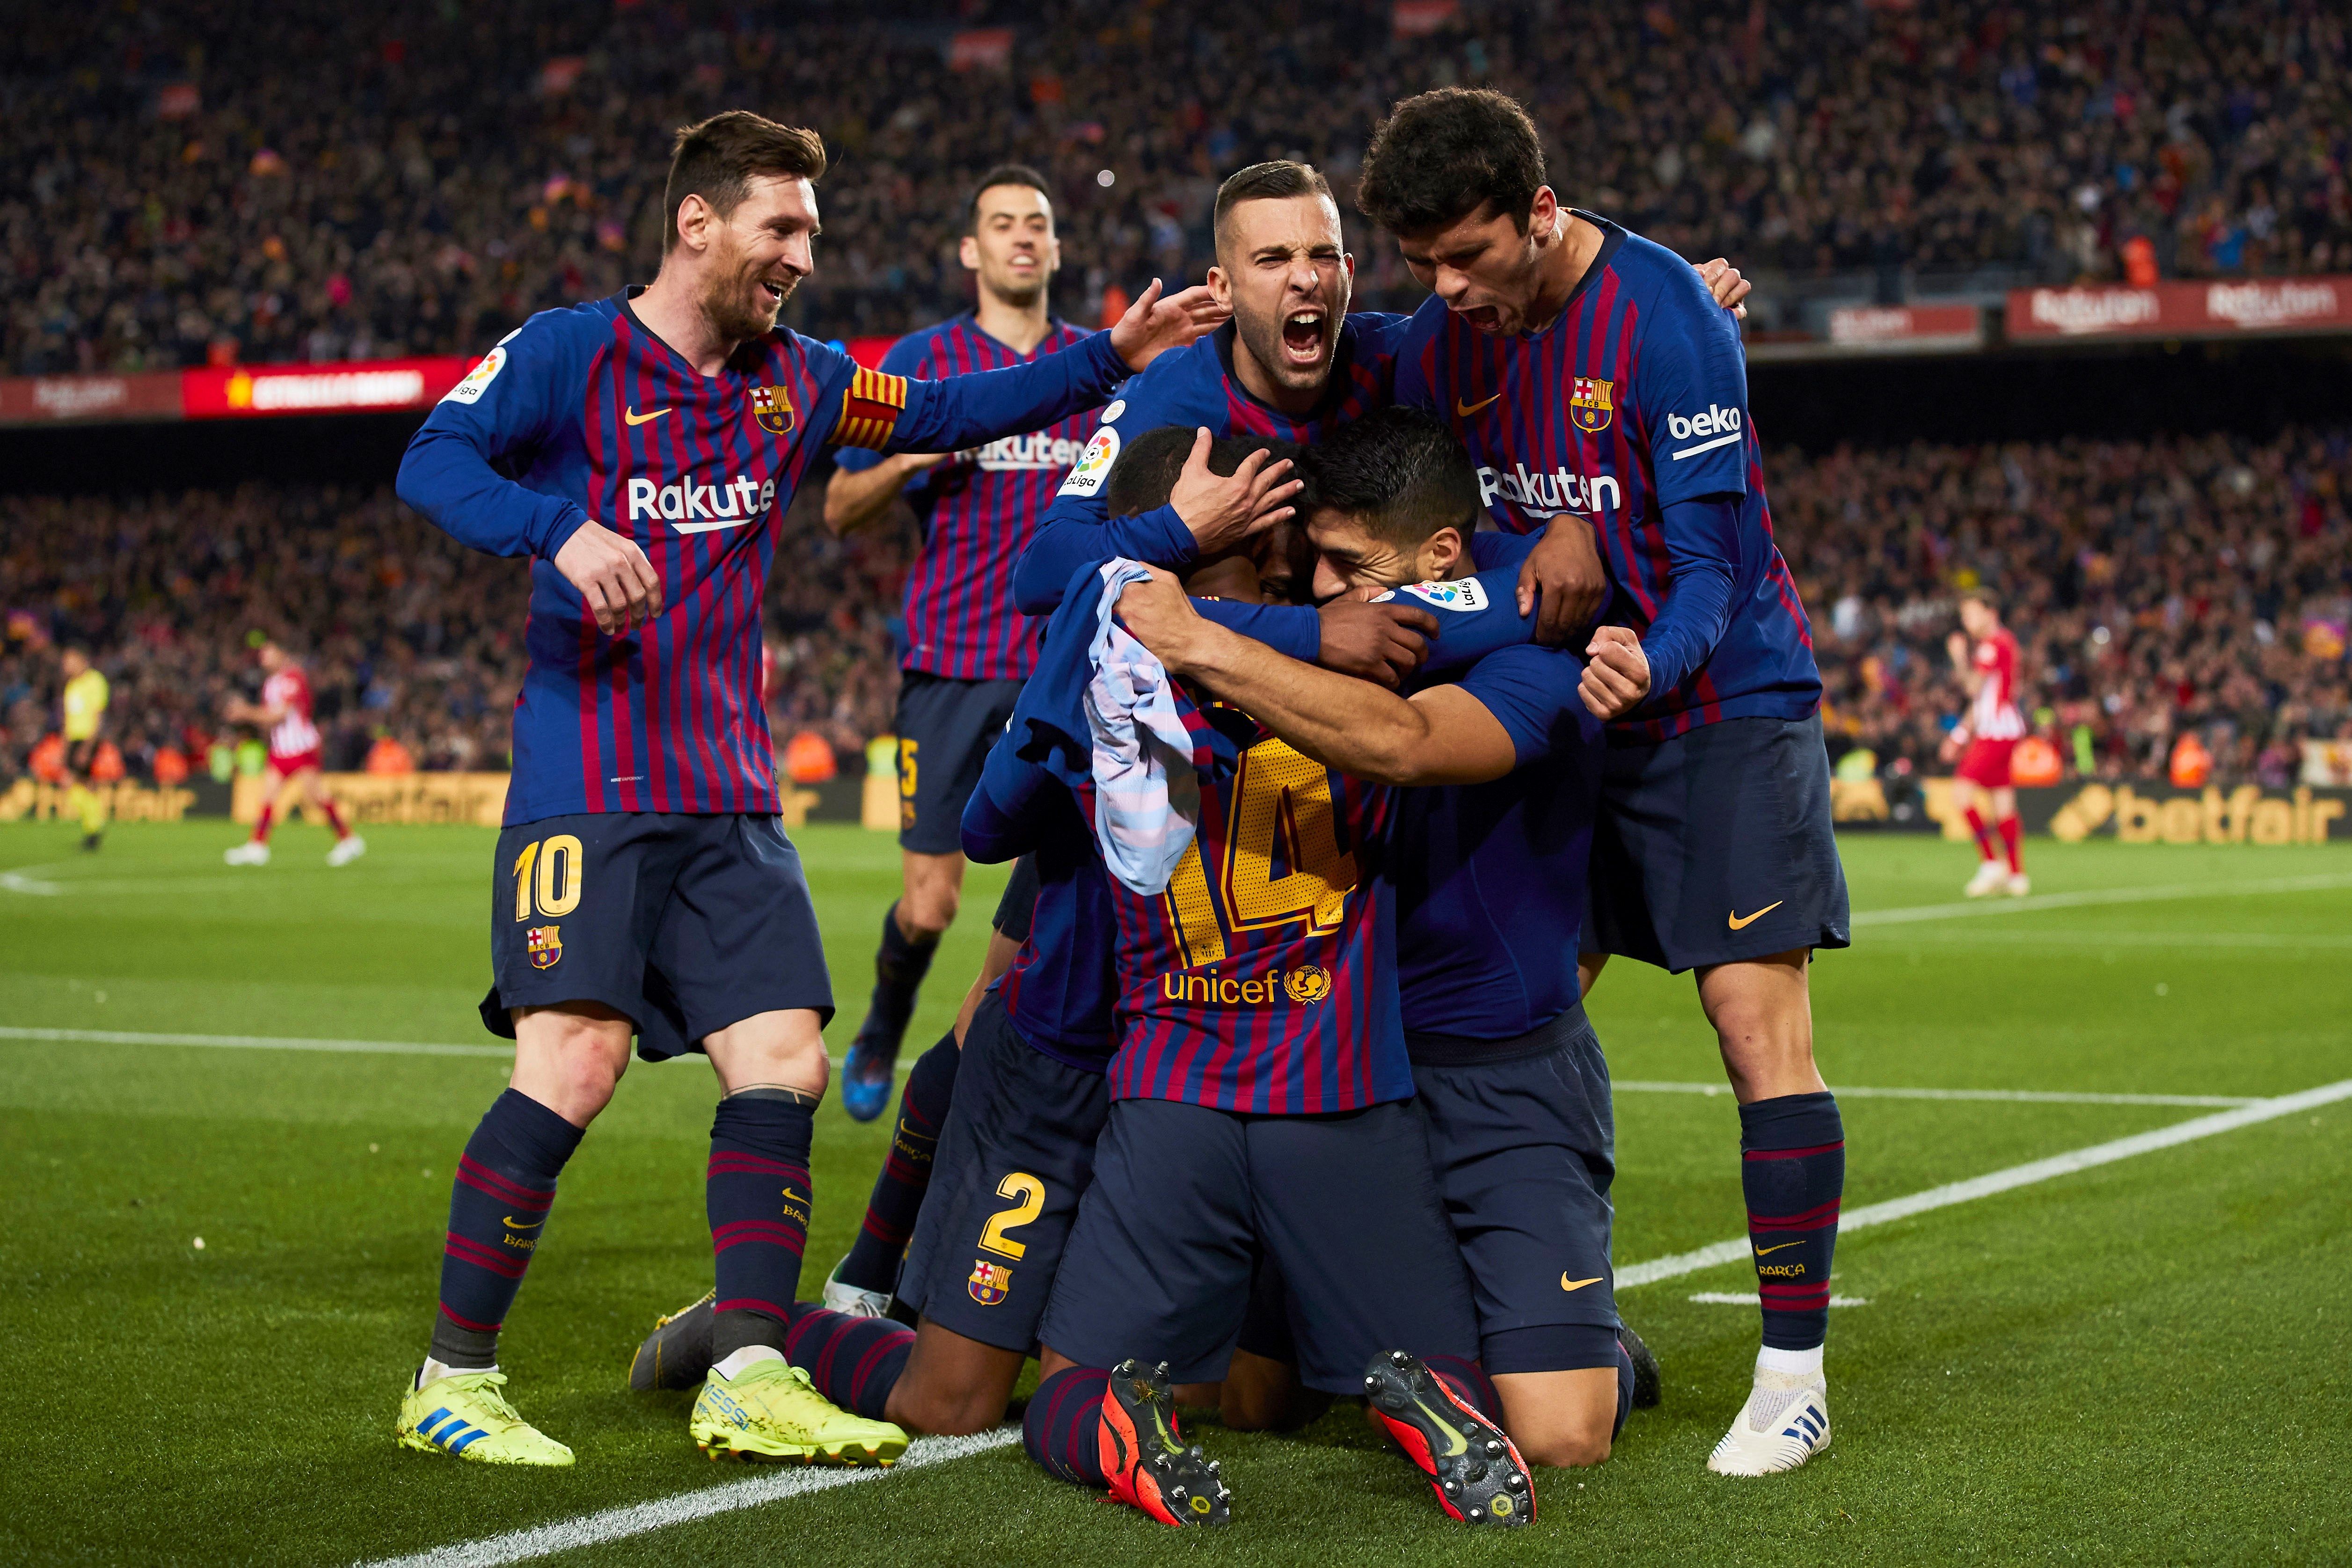 Barça, a champion consolidating its dominance: 8 'Lliga' trophies in 11 seasons